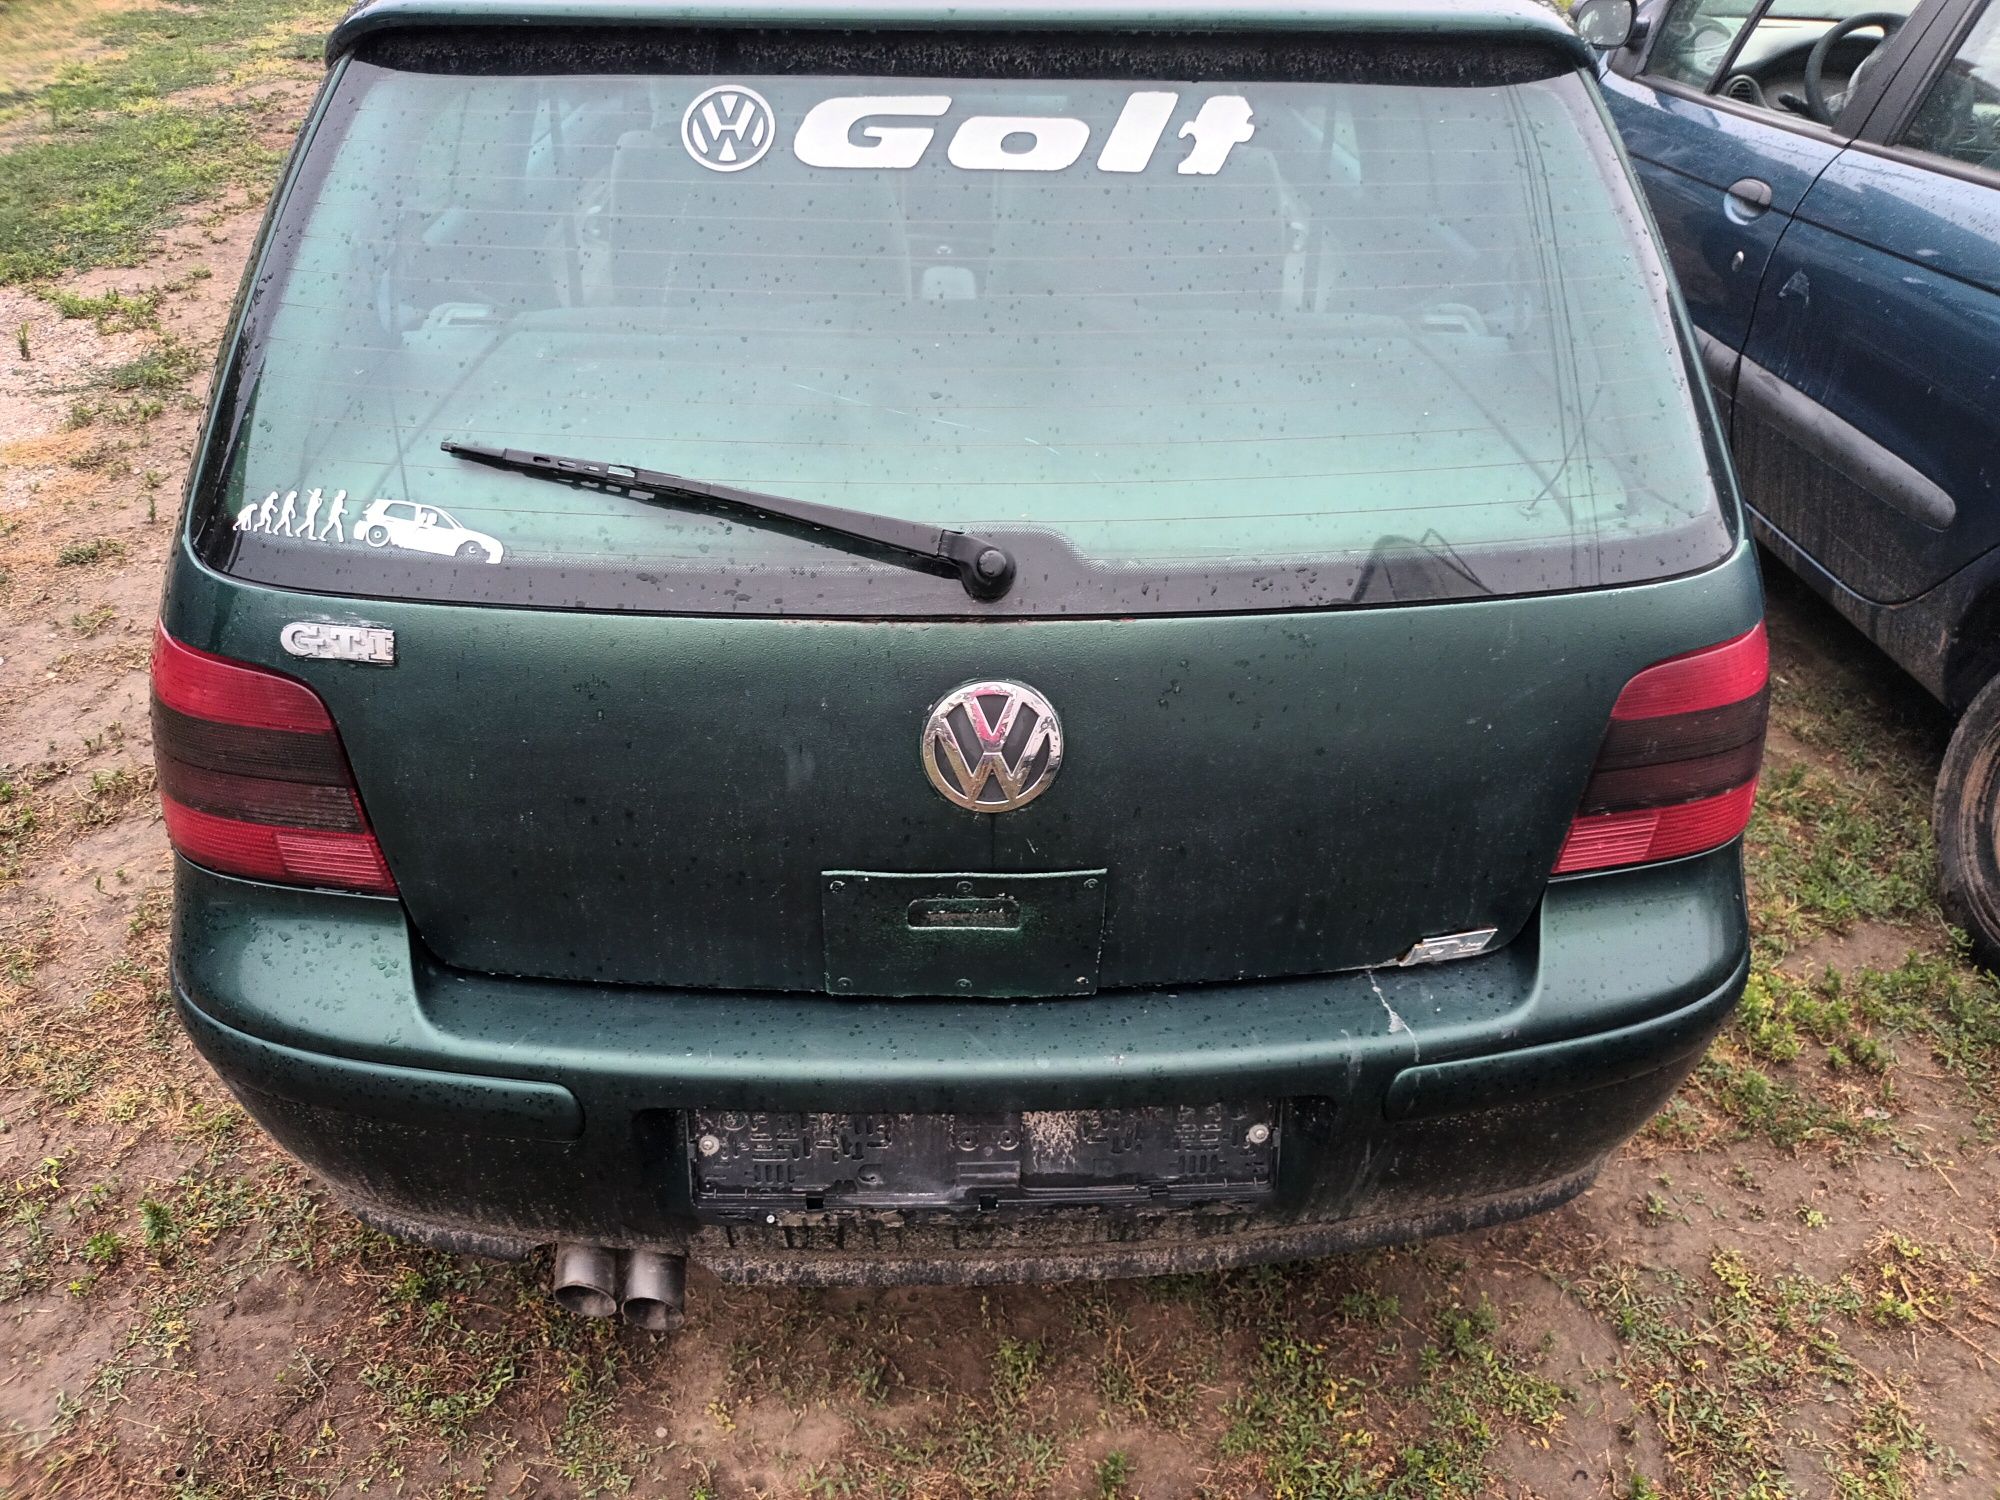 Фолксваген голф 4 ср 1.6 101к.с. на части Volkswagen golf 4 SR 1.6 101